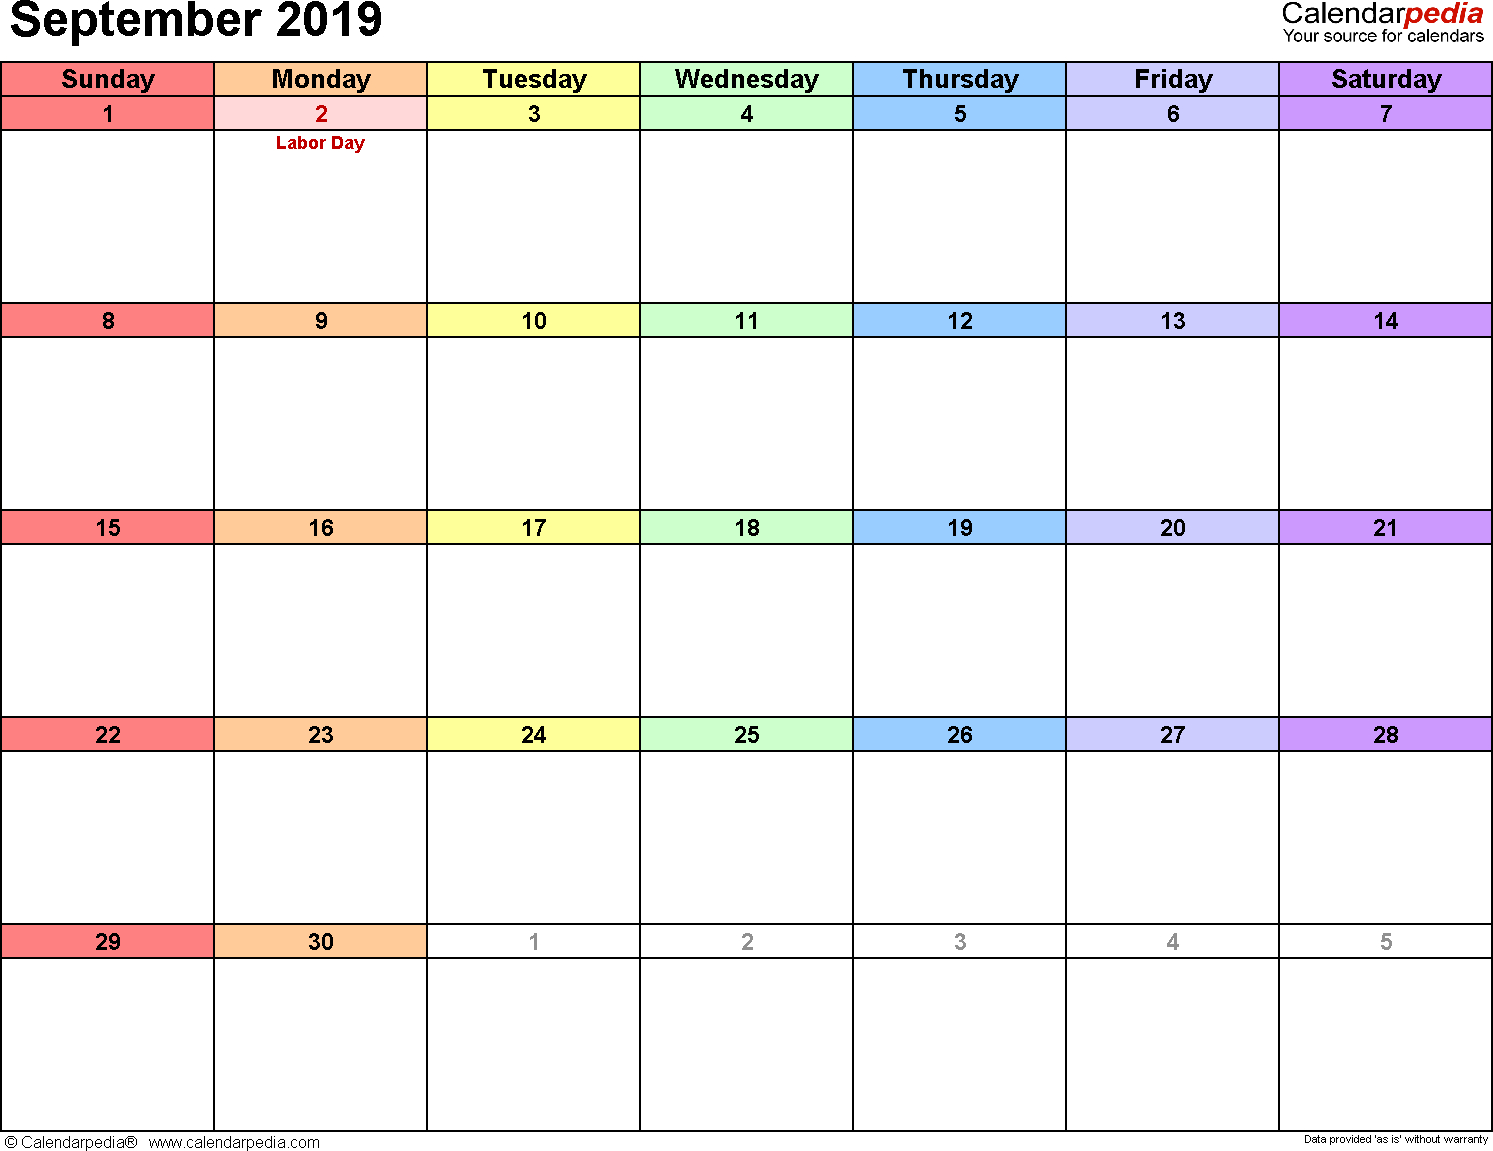 Calendarpedia - Your Source For Calendars